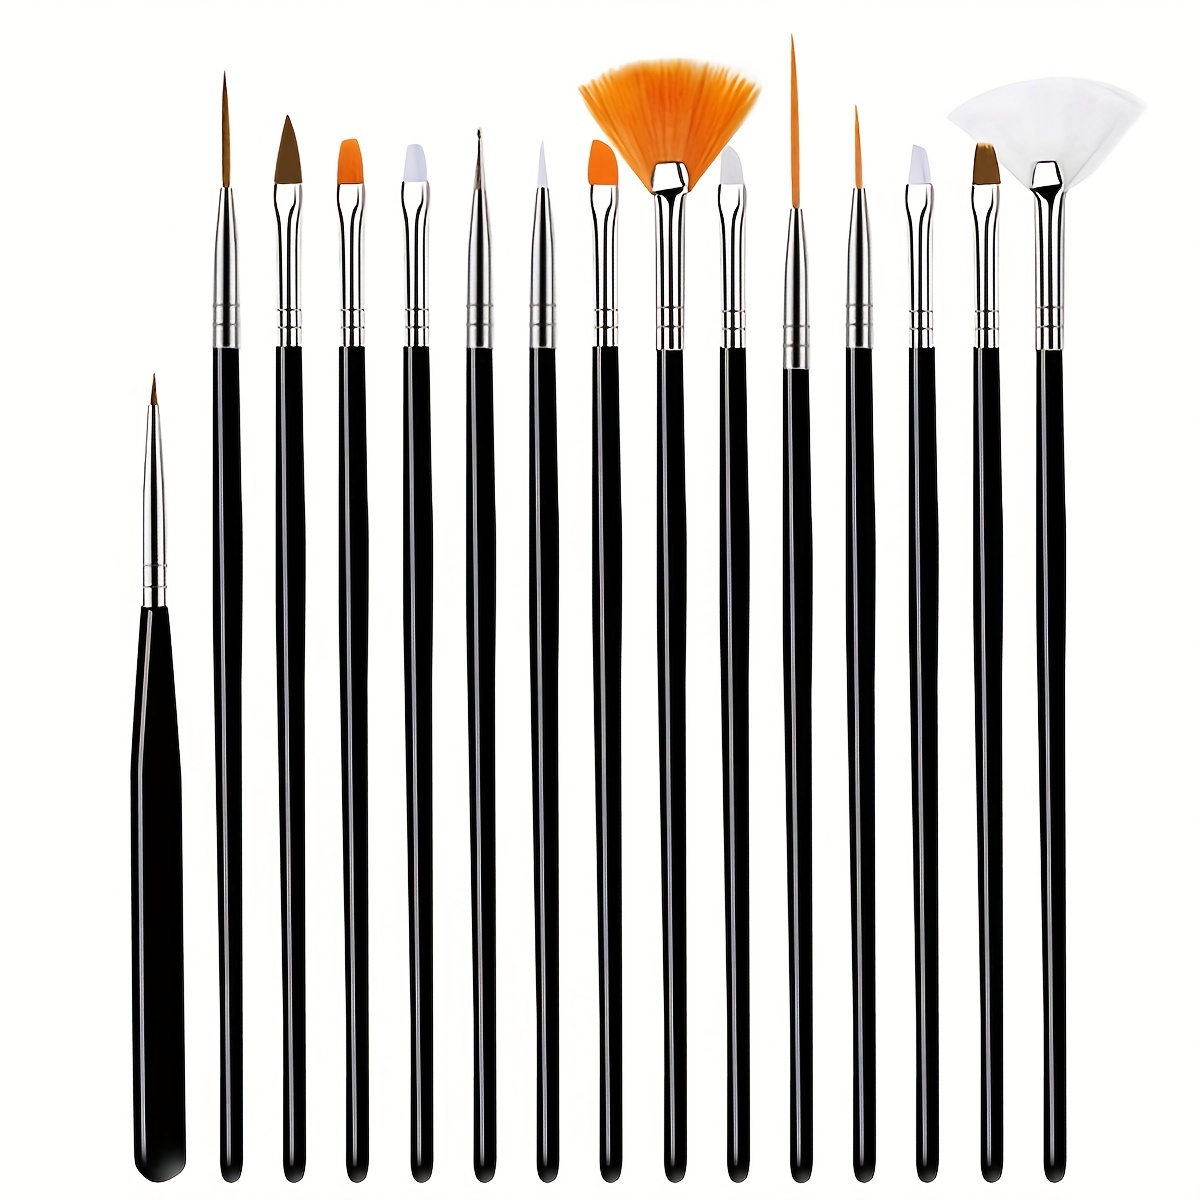 

15pcs Fine Detail Paint Brush Set - Miniature Paint Brush For Detailing & Art Painting - Acrylic, Watercolor, Oil,models, Airplane Kits, Nail Artist Supplies